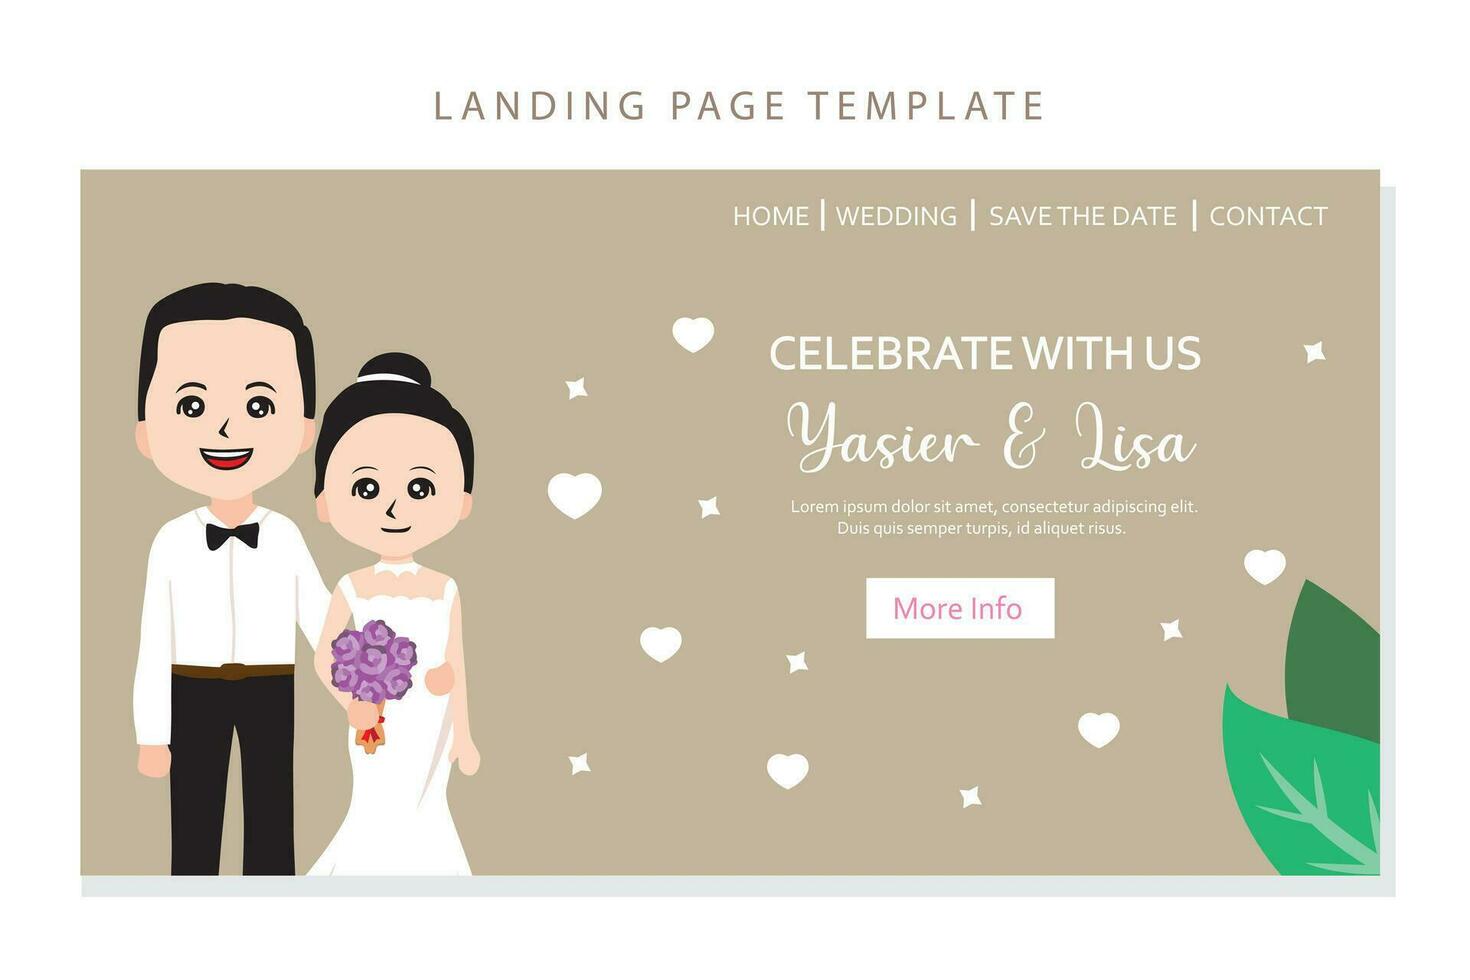 wedding invitation design with couple in love, vector illustration.